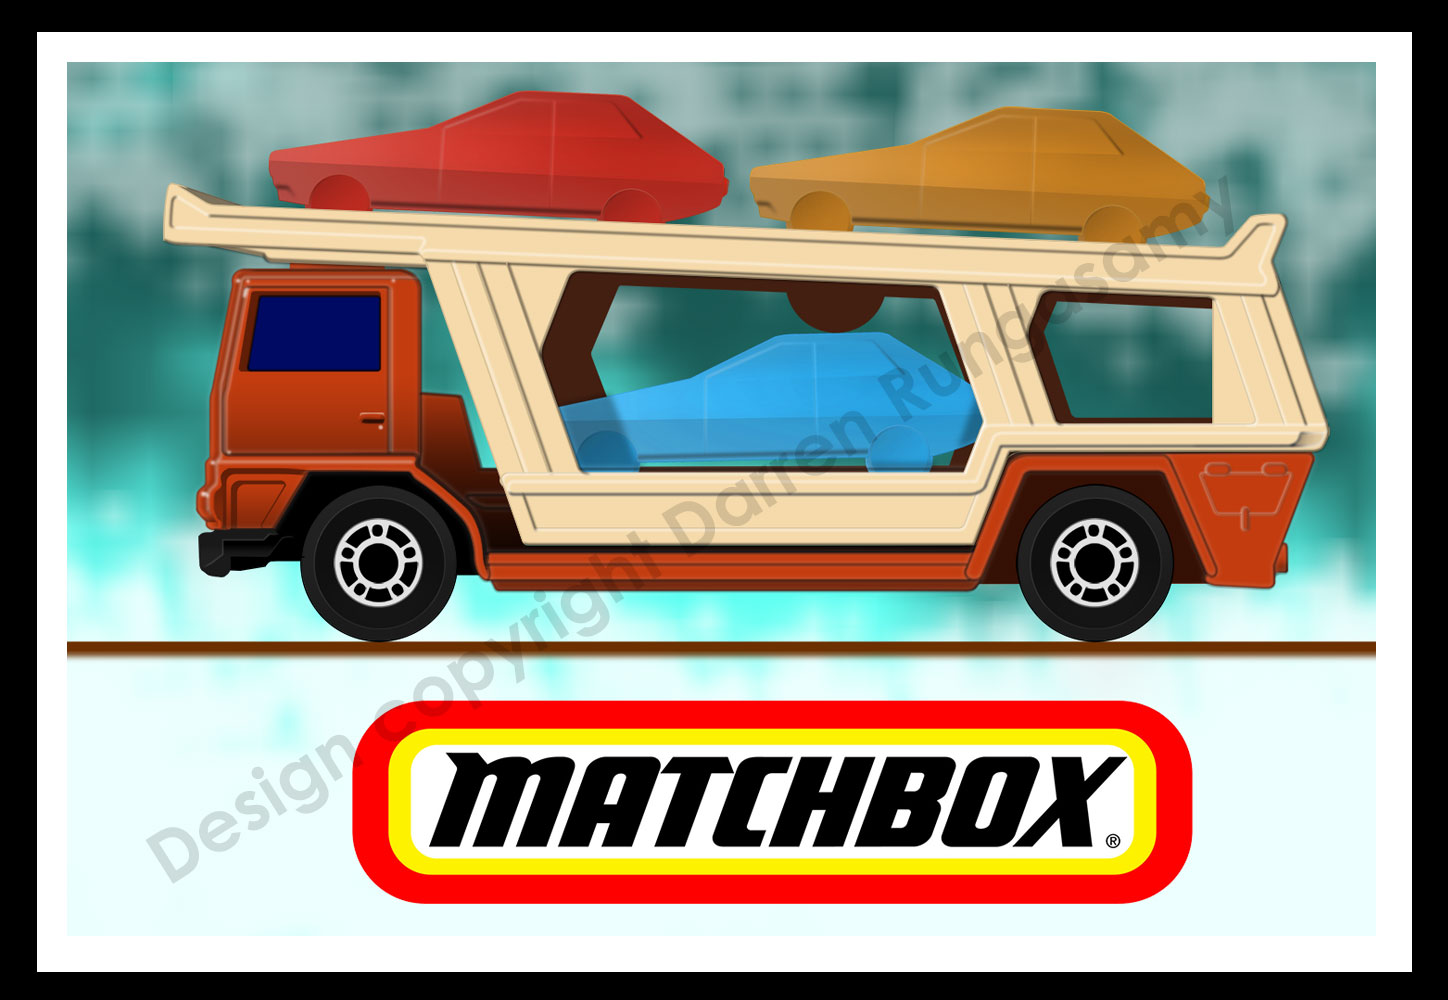 matchbox bedford superfast transporter drawing photoshop